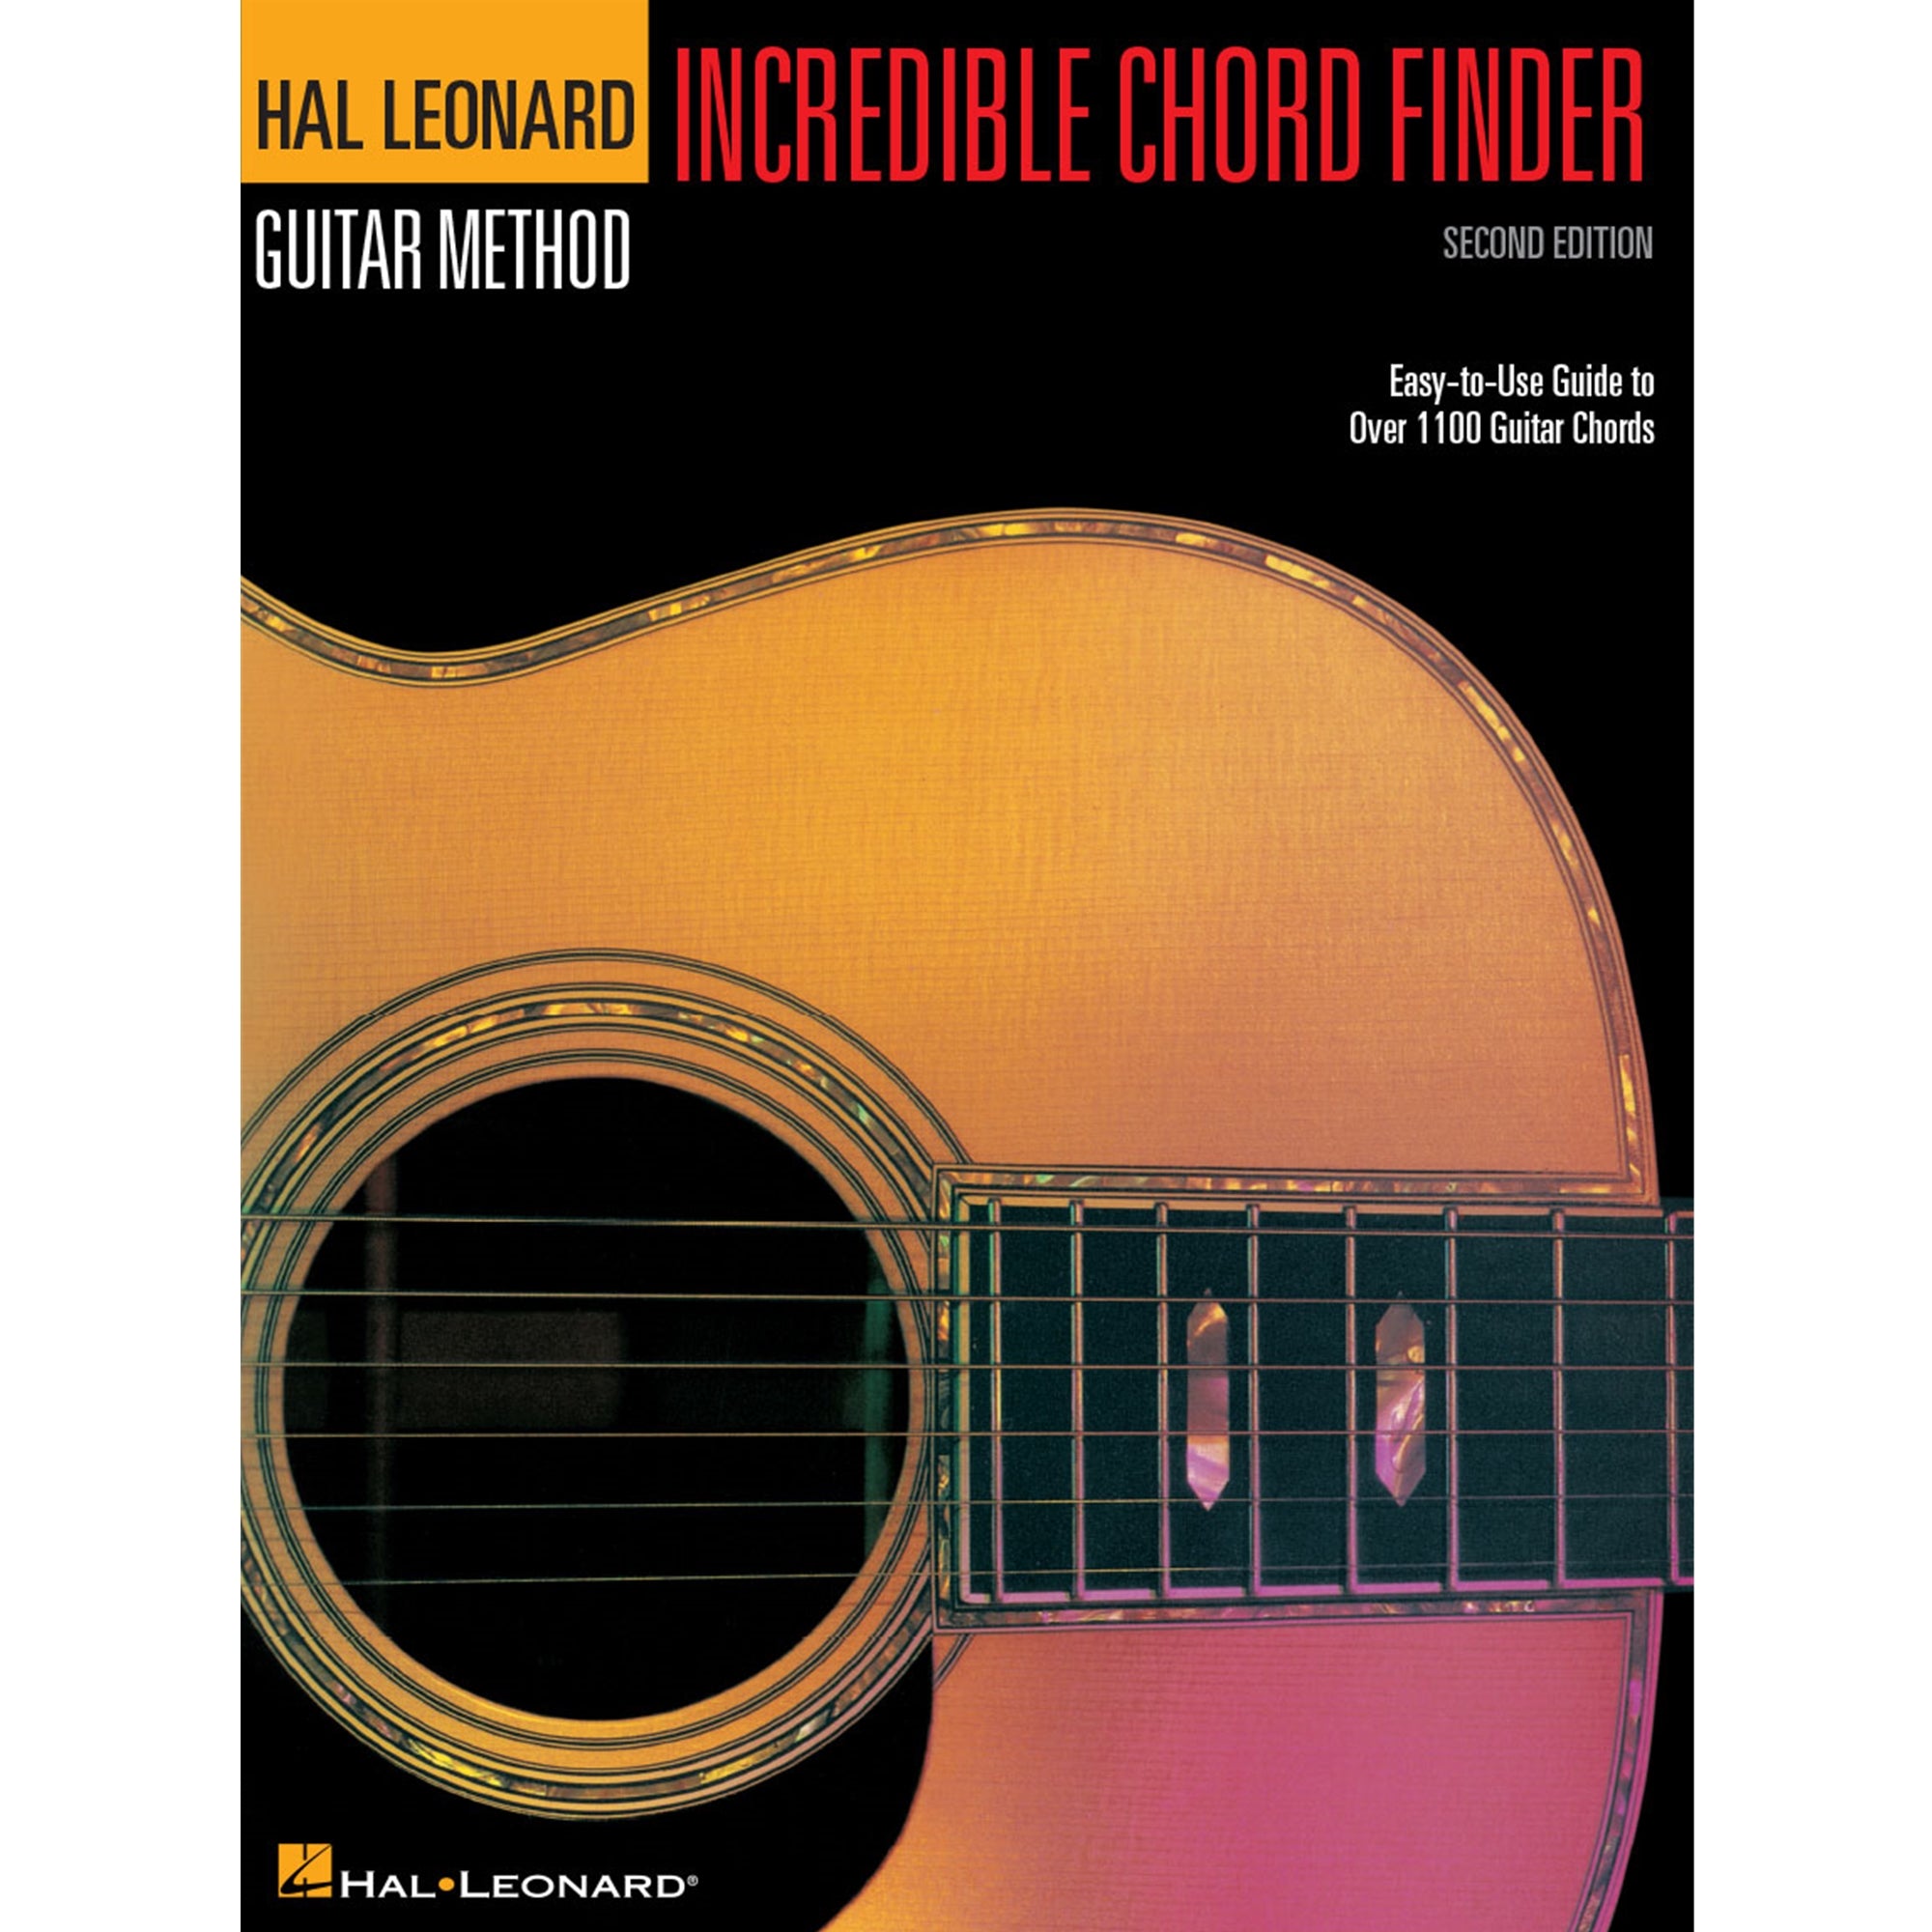 HAL LEONARD 697208 Incredible Chord Finder